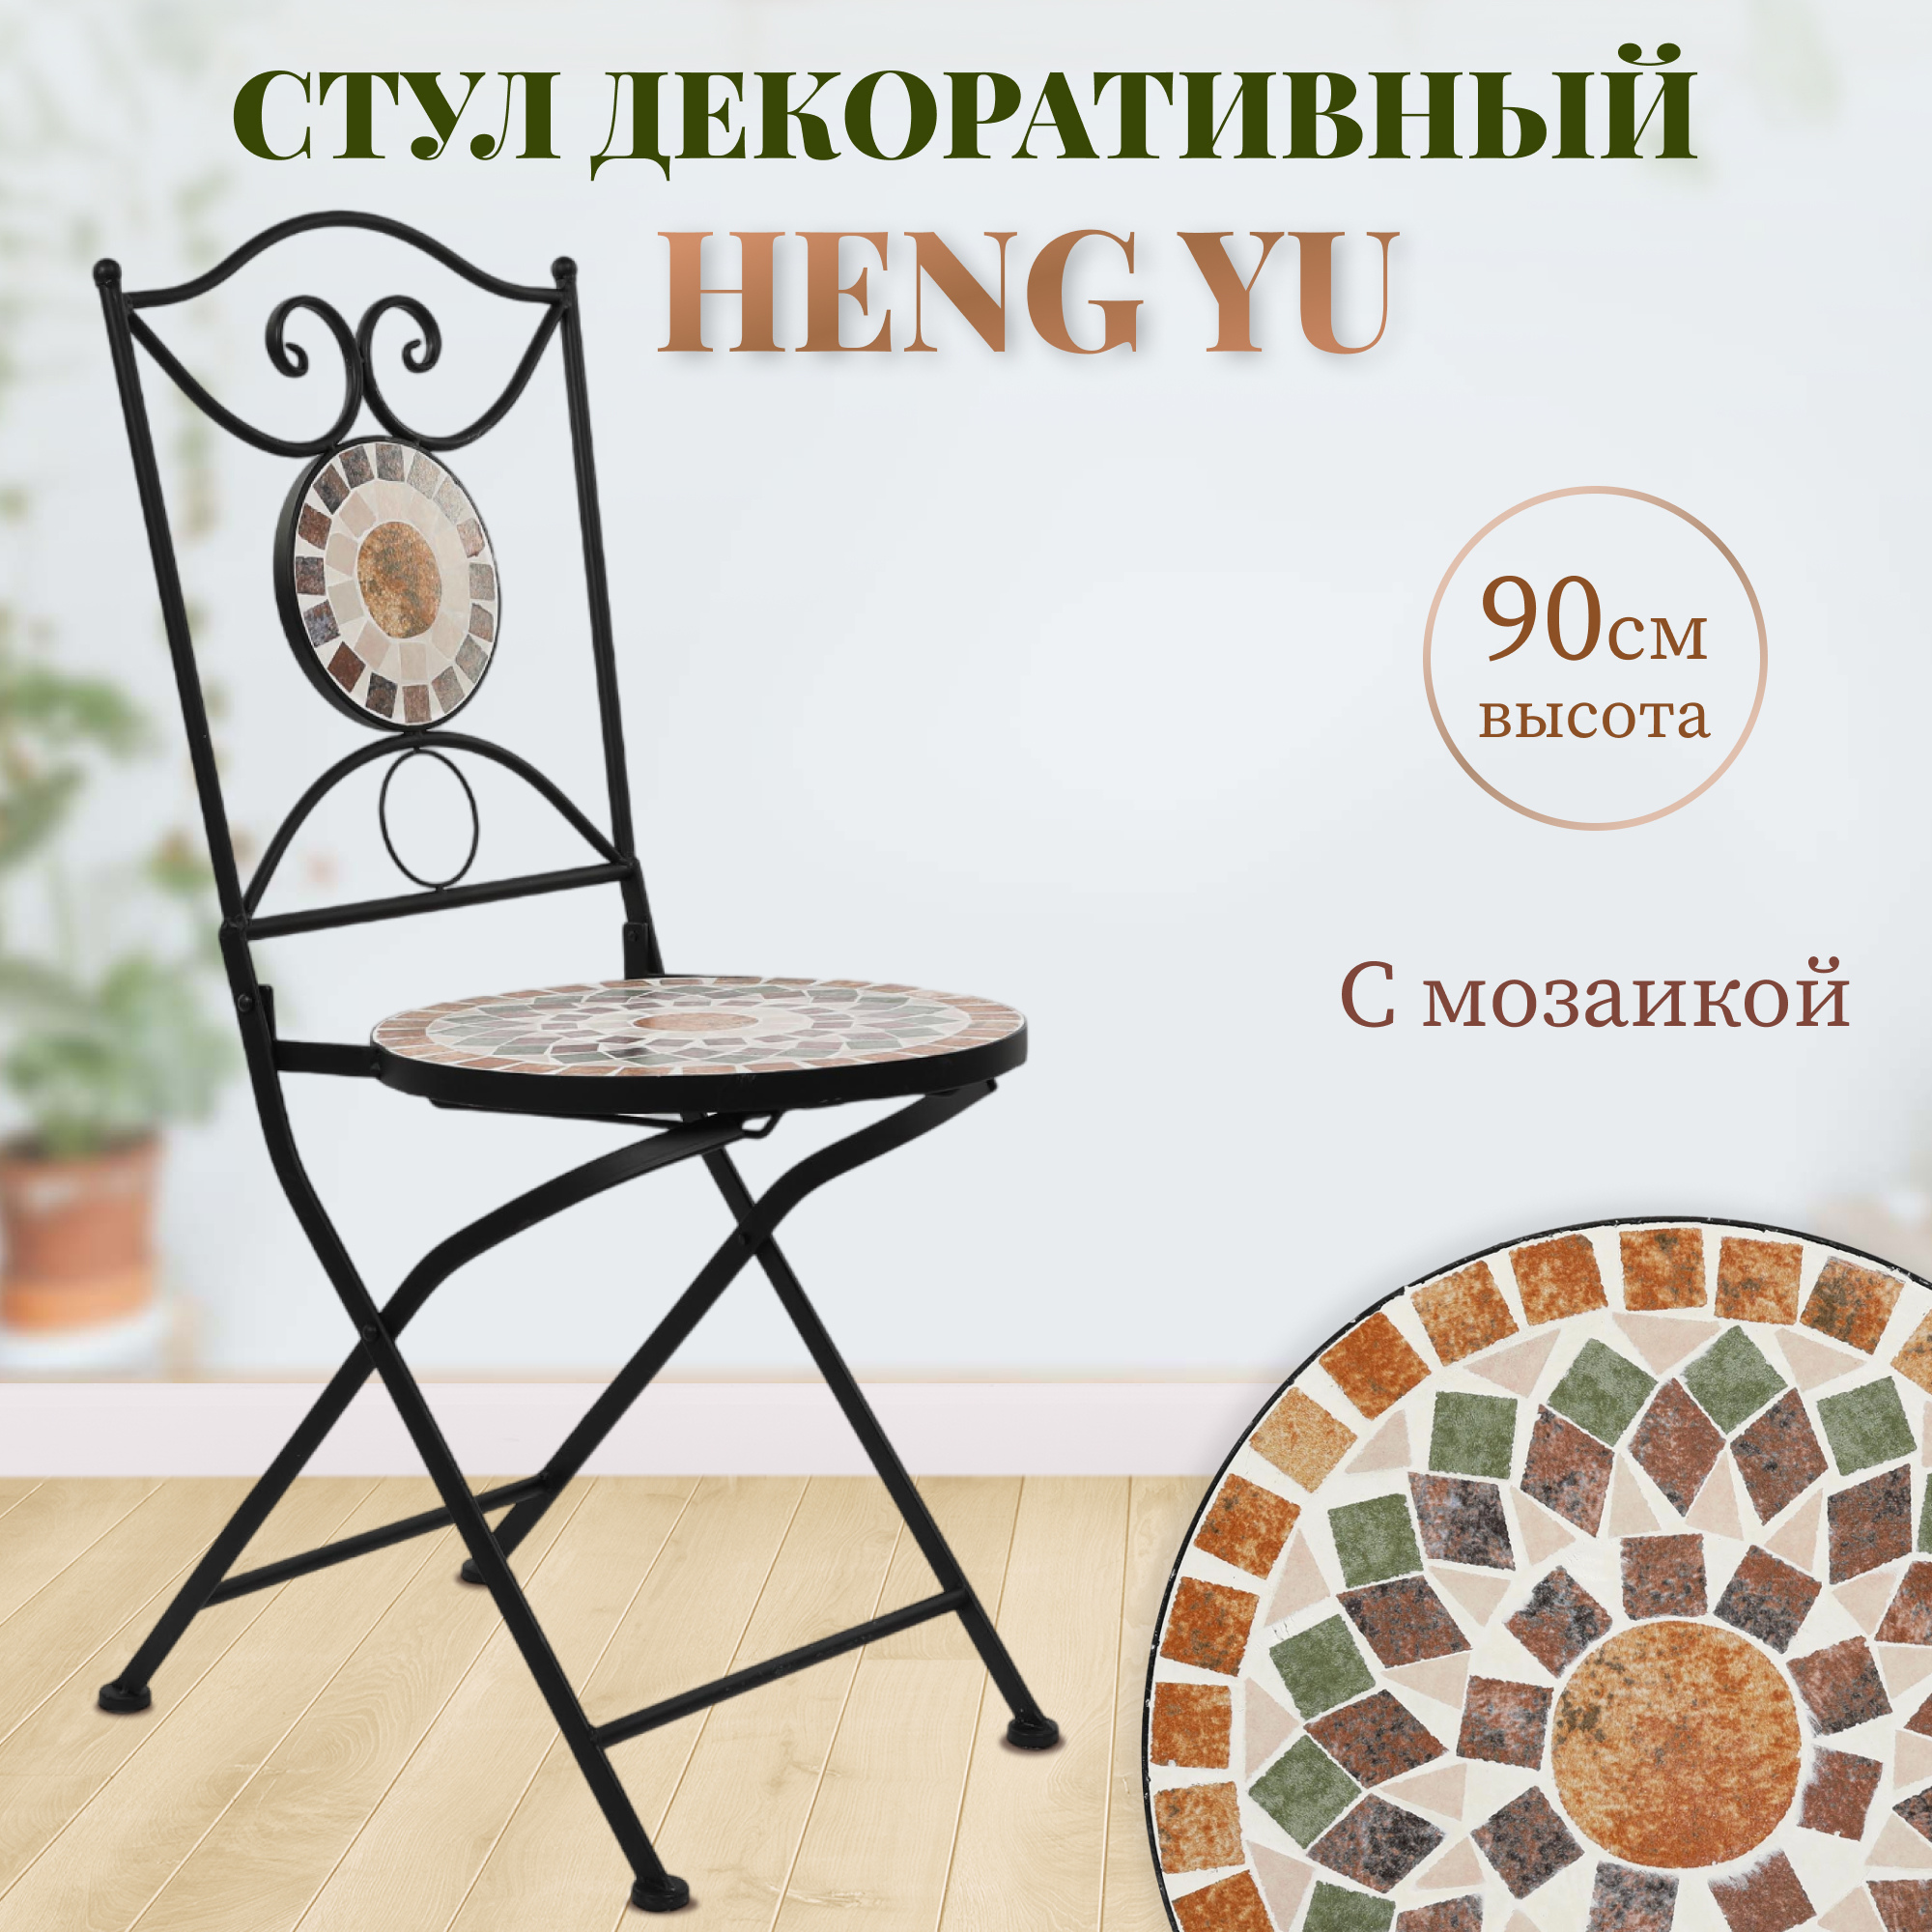 фото Декоративный стул heng yu с мозайкой патио 38х38х90 см